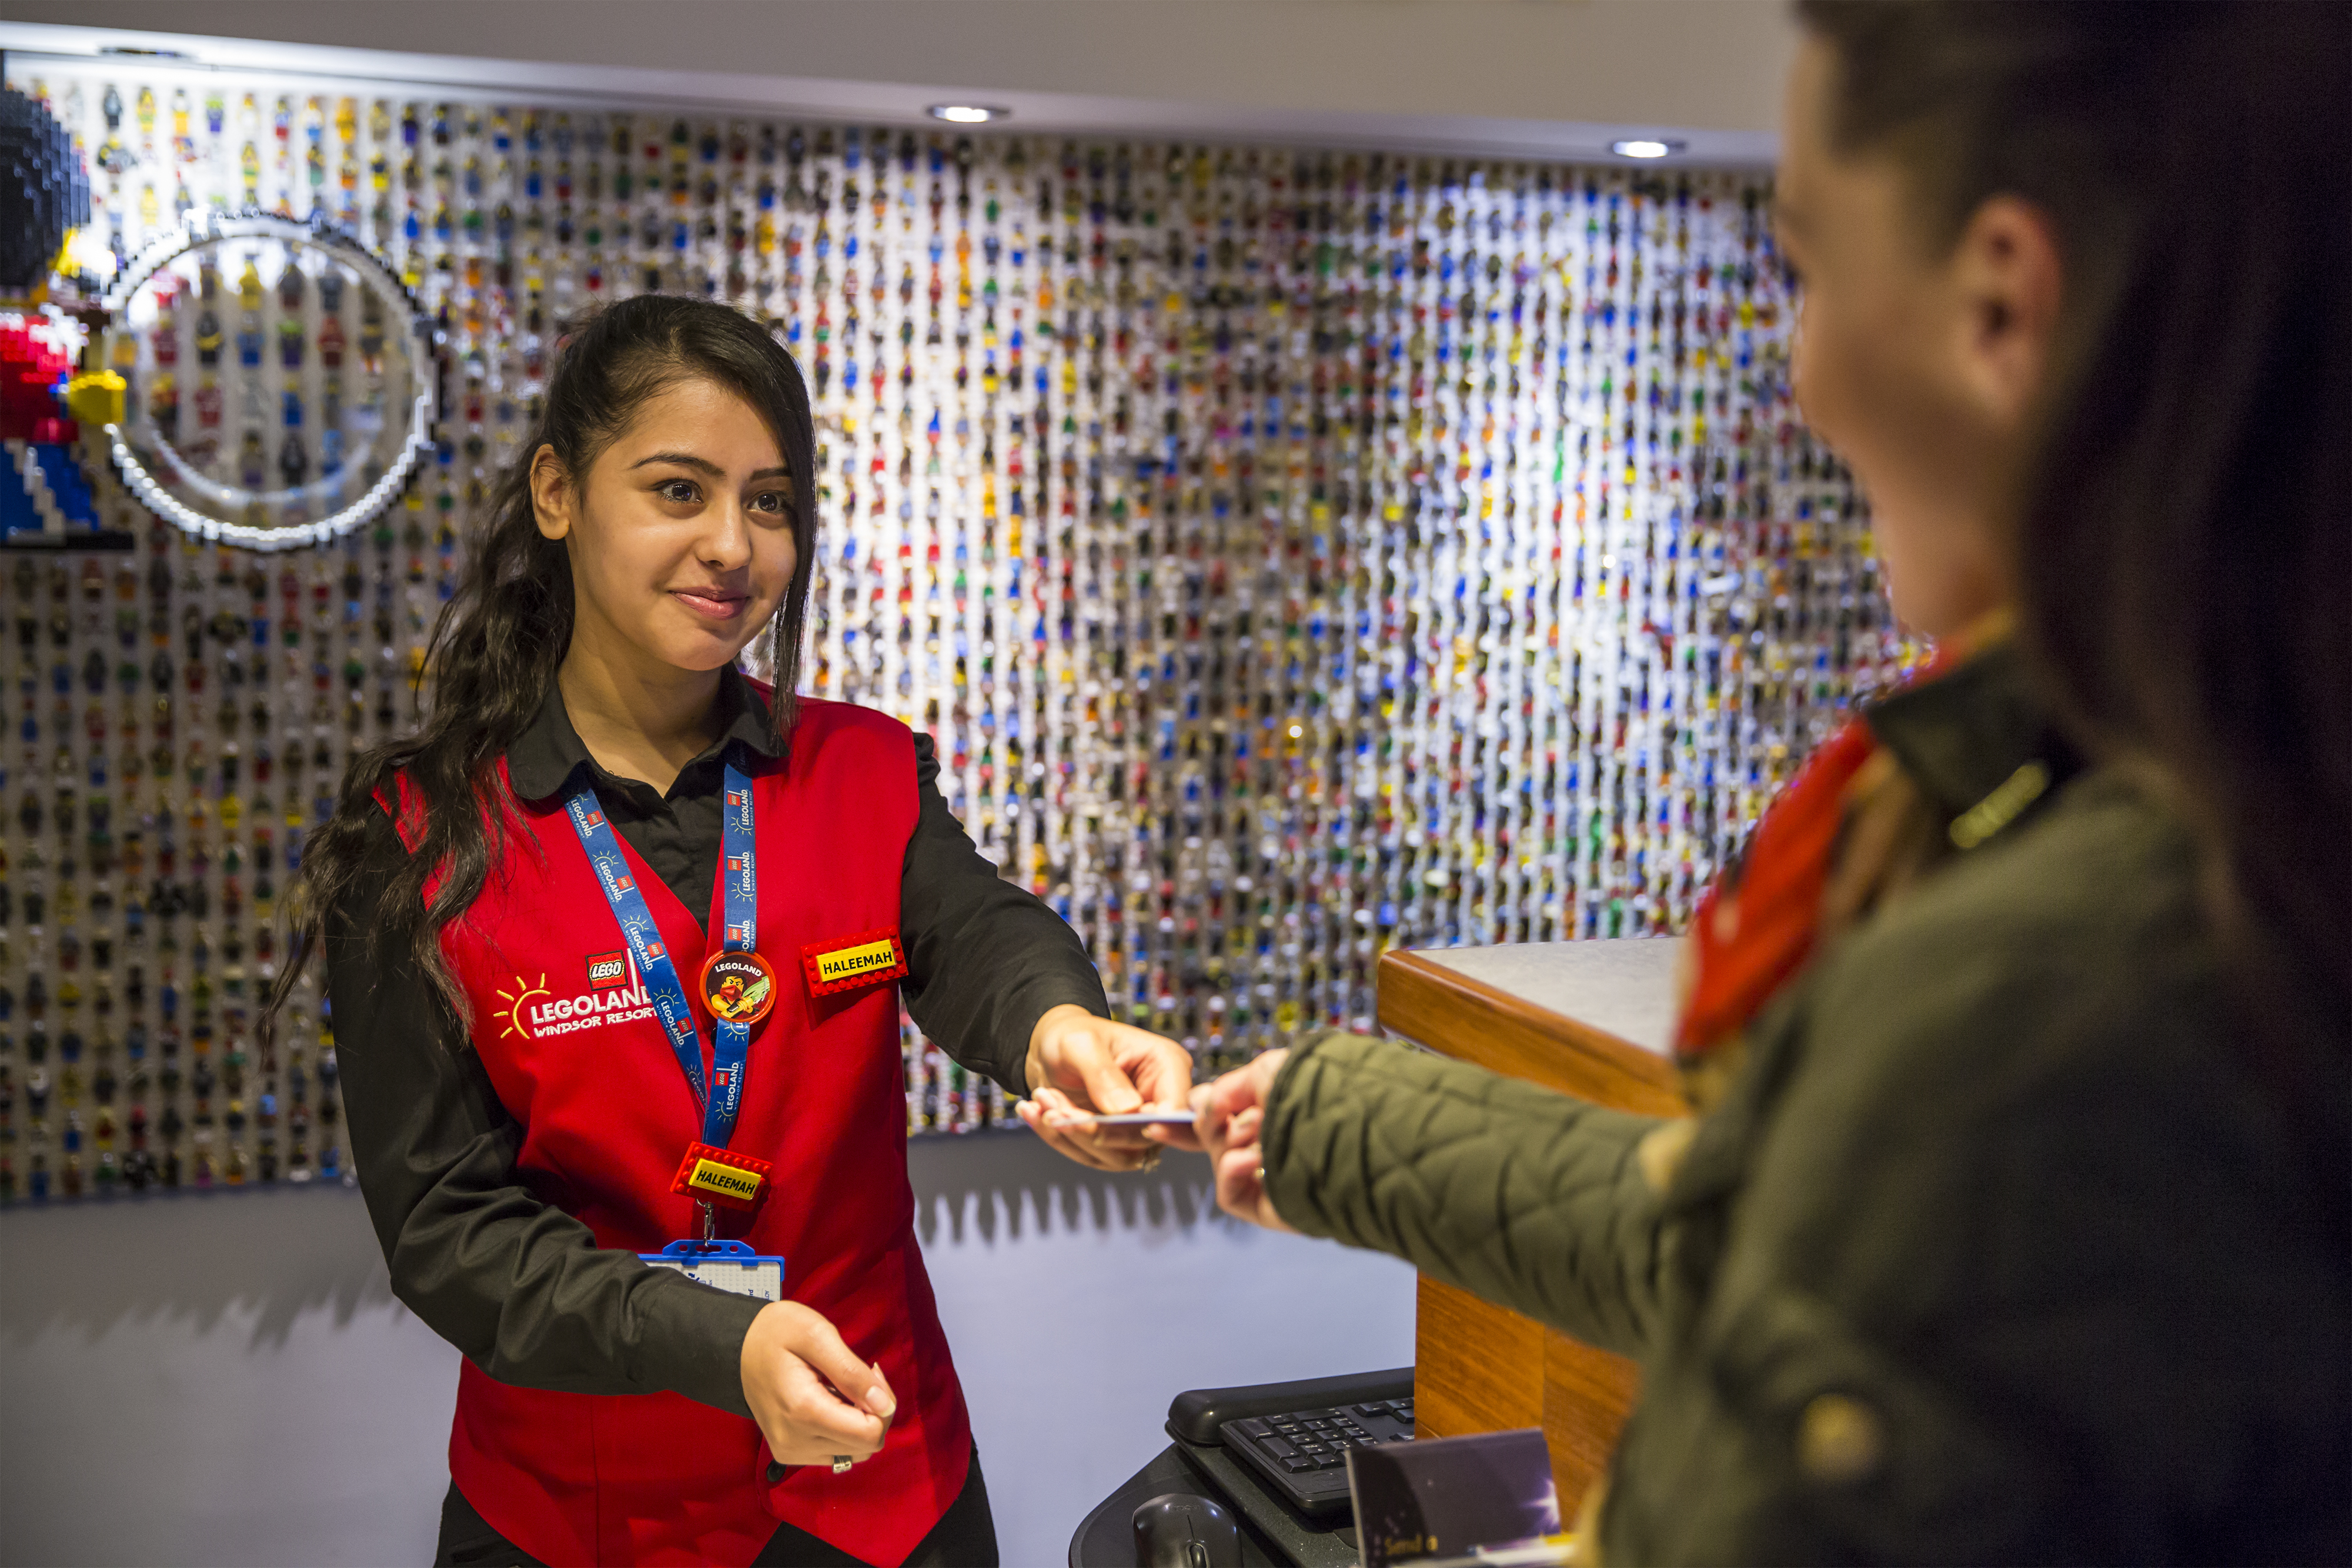 Member of Staff at Check in at LEGOLAND Resort Hotels